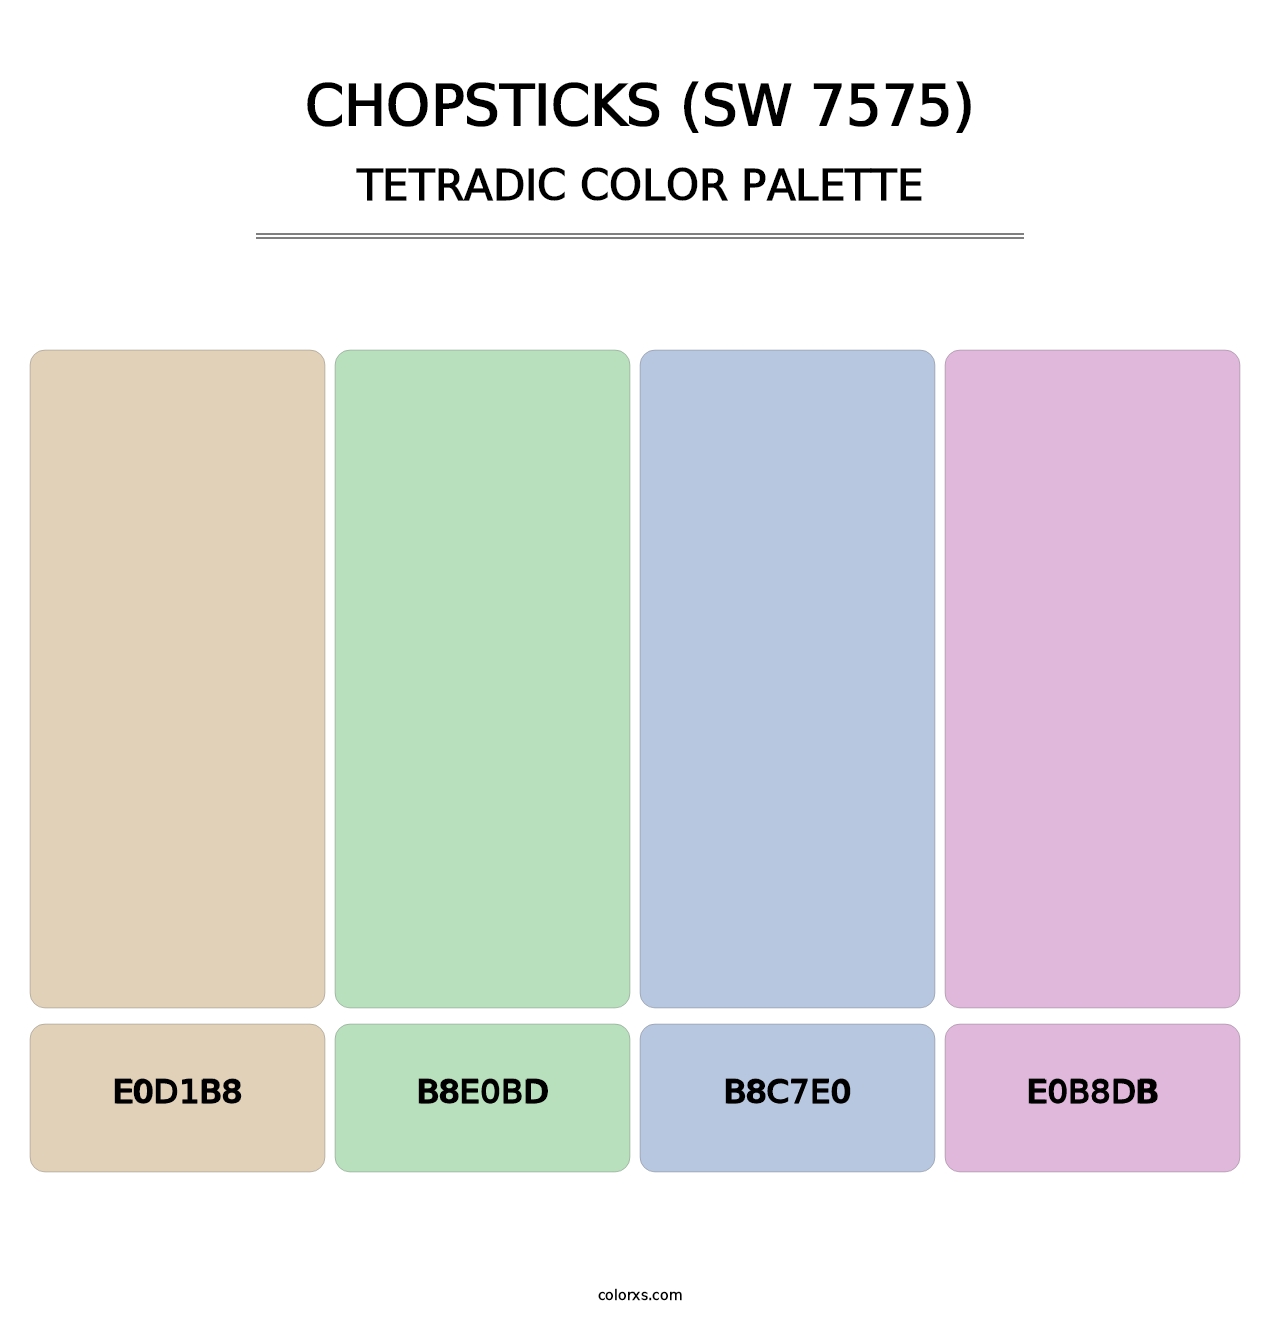 Chopsticks (SW 7575) - Tetradic Color Palette